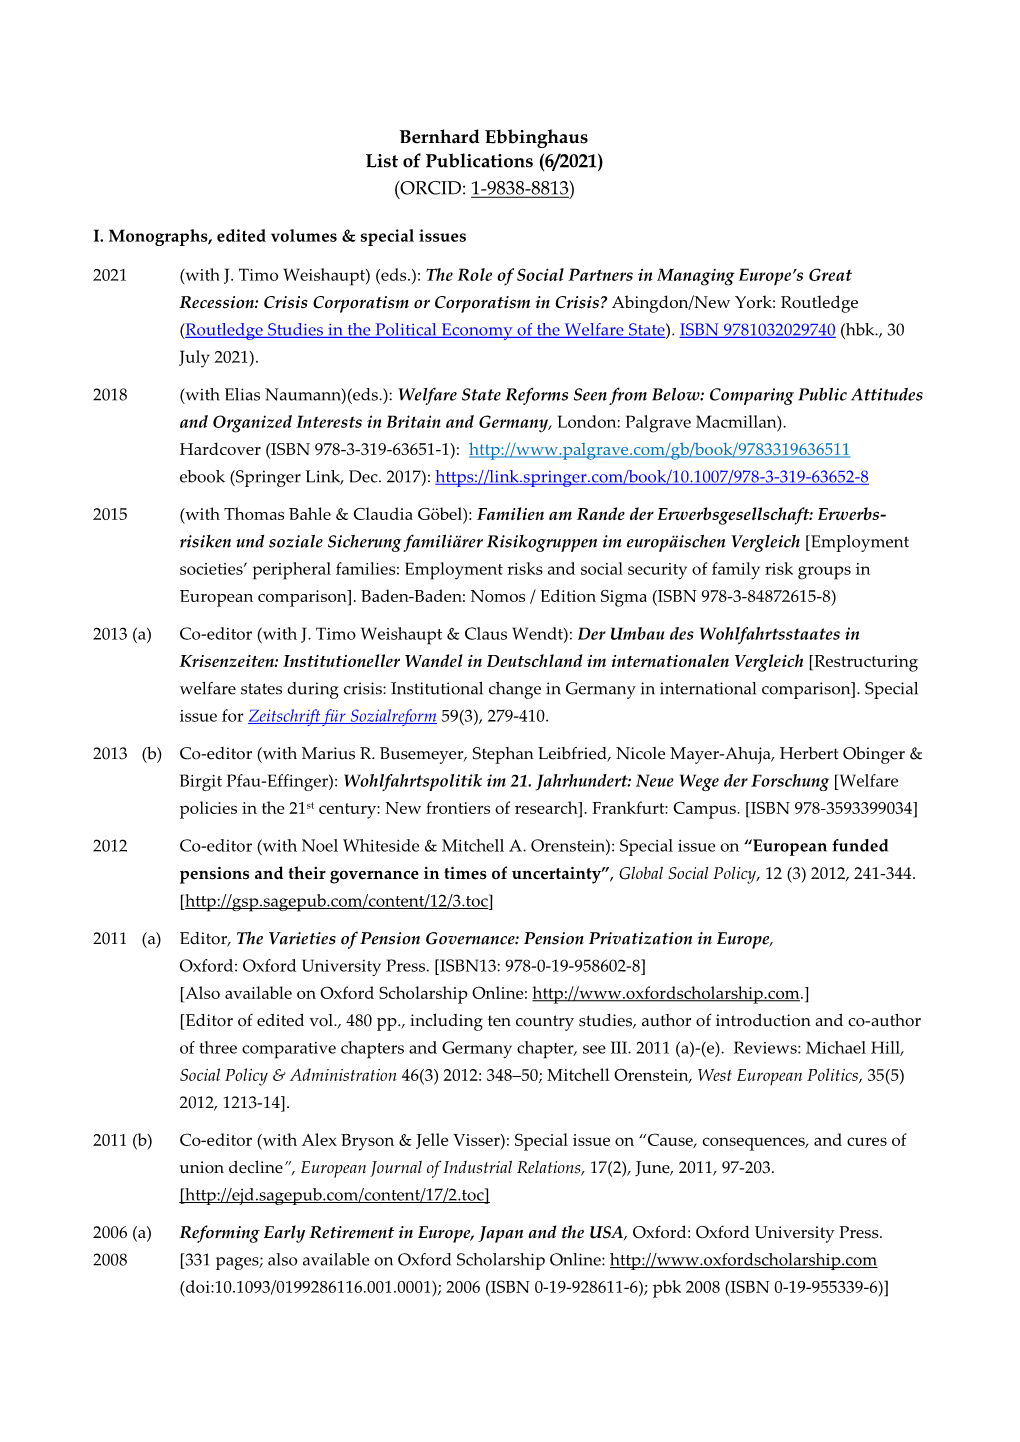 Bernhard Ebbinghaus List of Publications (6/2021) (ORCID: 1-9838-8813)